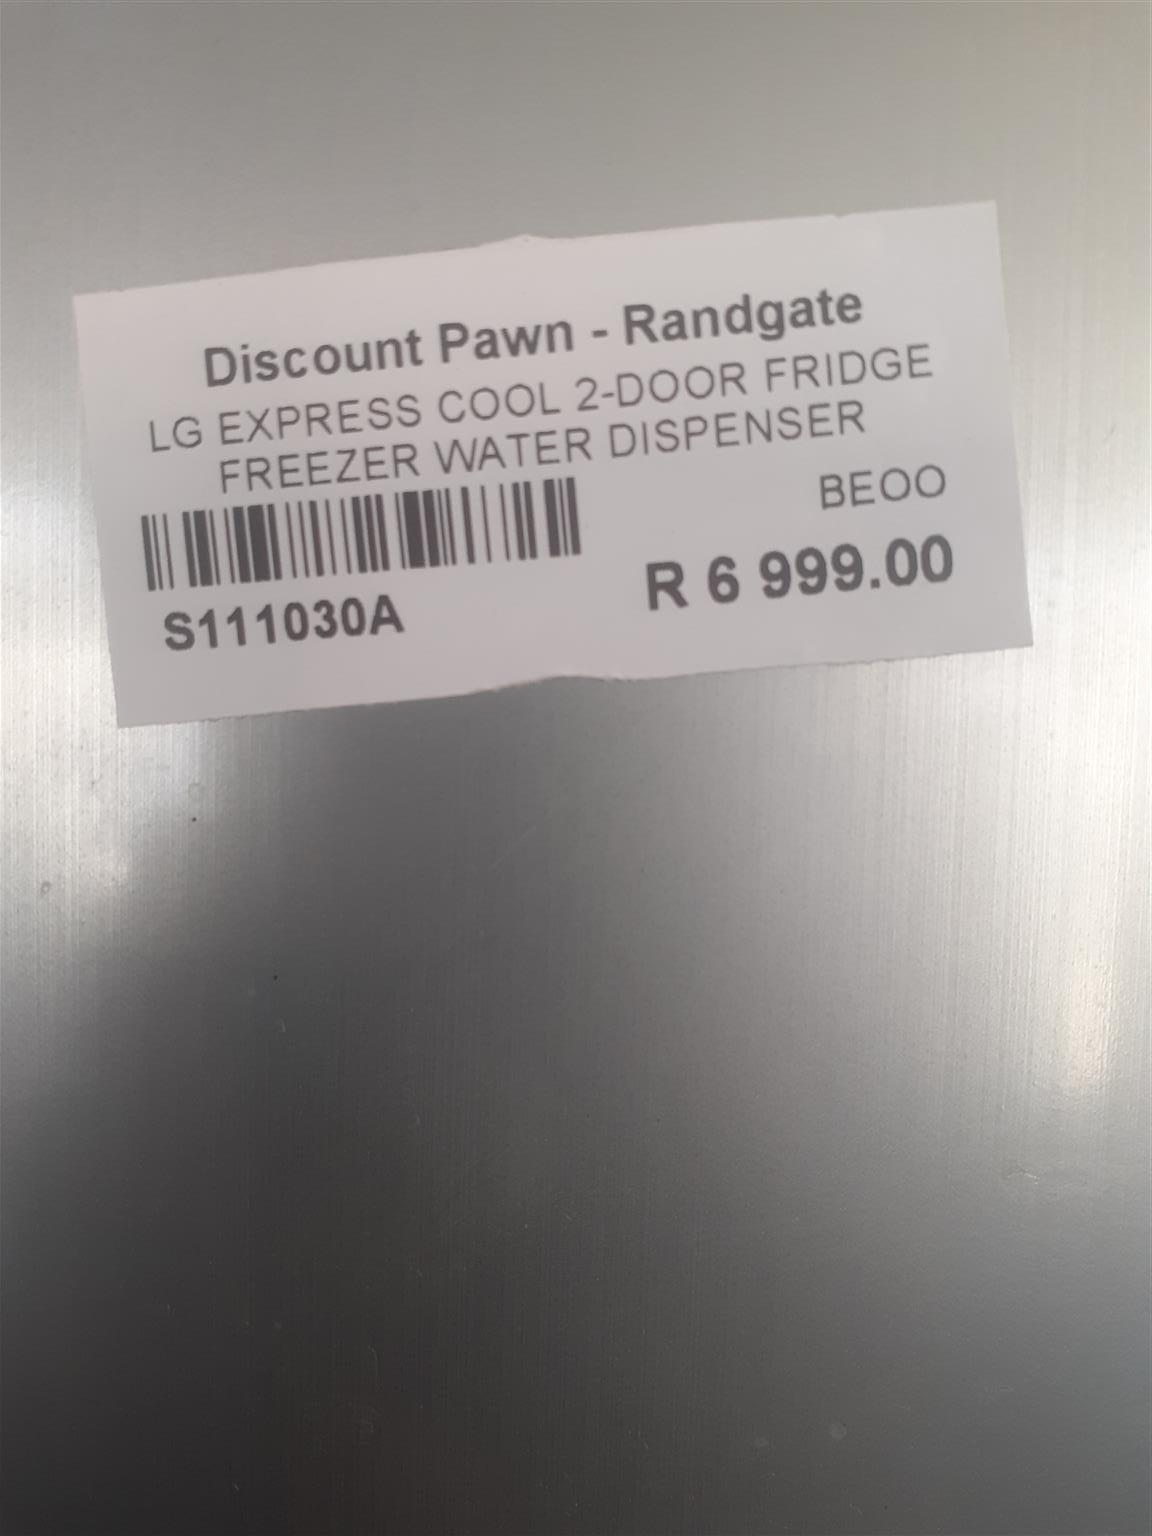 LG EXPRESS COOL 2-DOOR FRIDGE (S111030A)